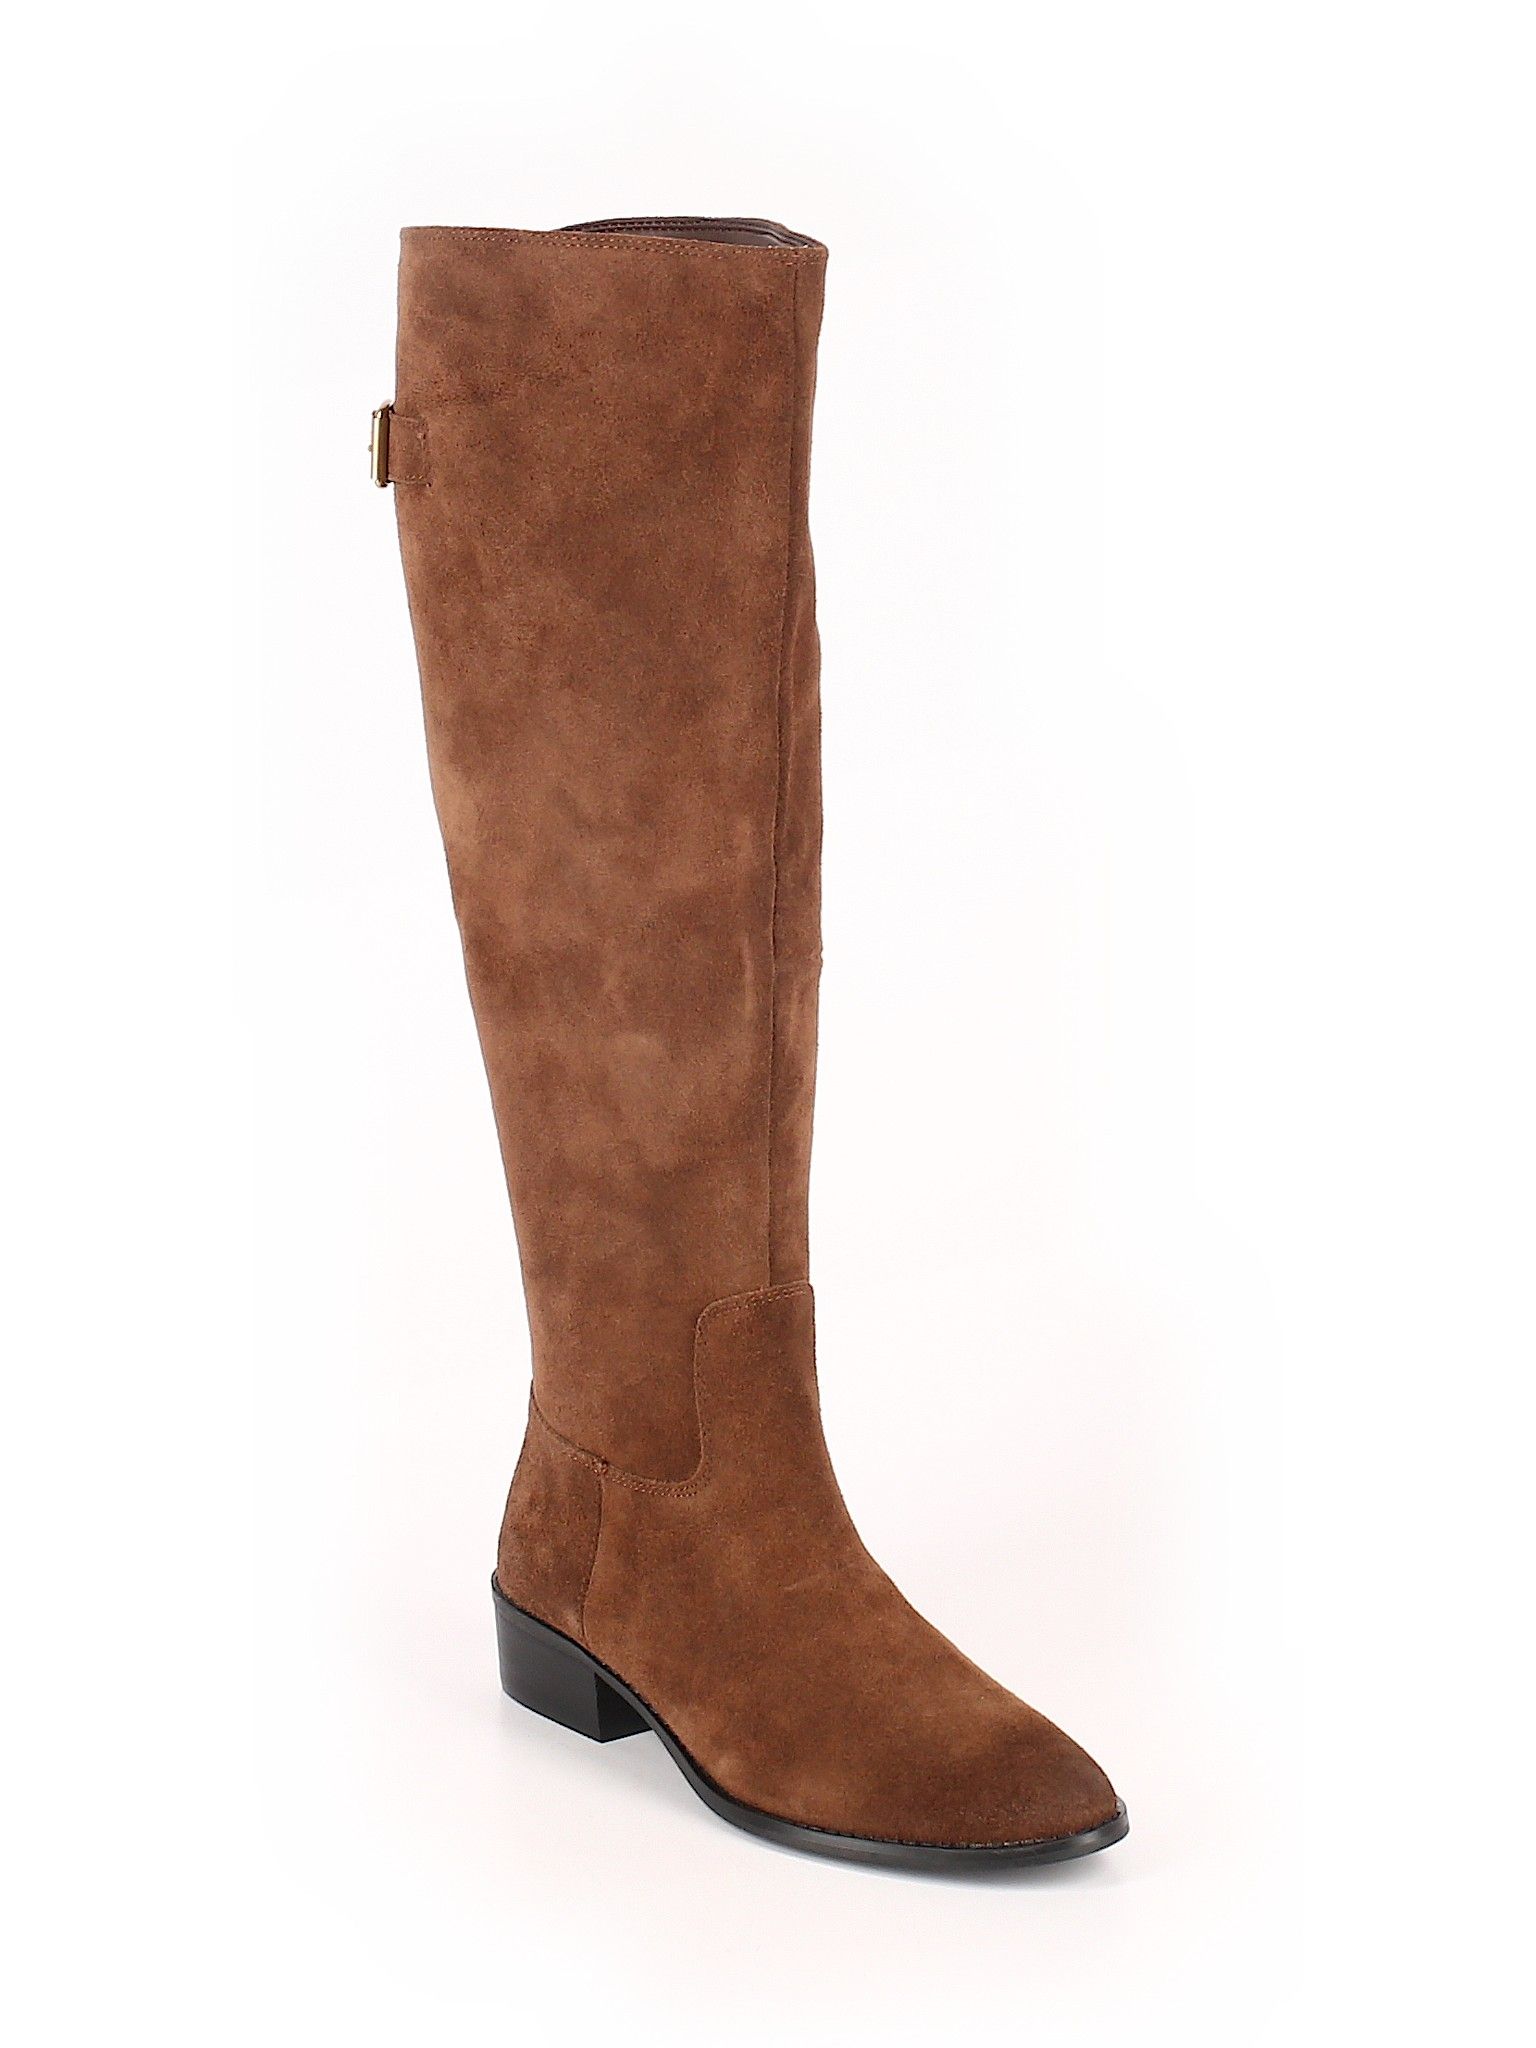 Aldo Boots Size 6 1/2: Brown Women's Clothing - 43276480 | thredUP